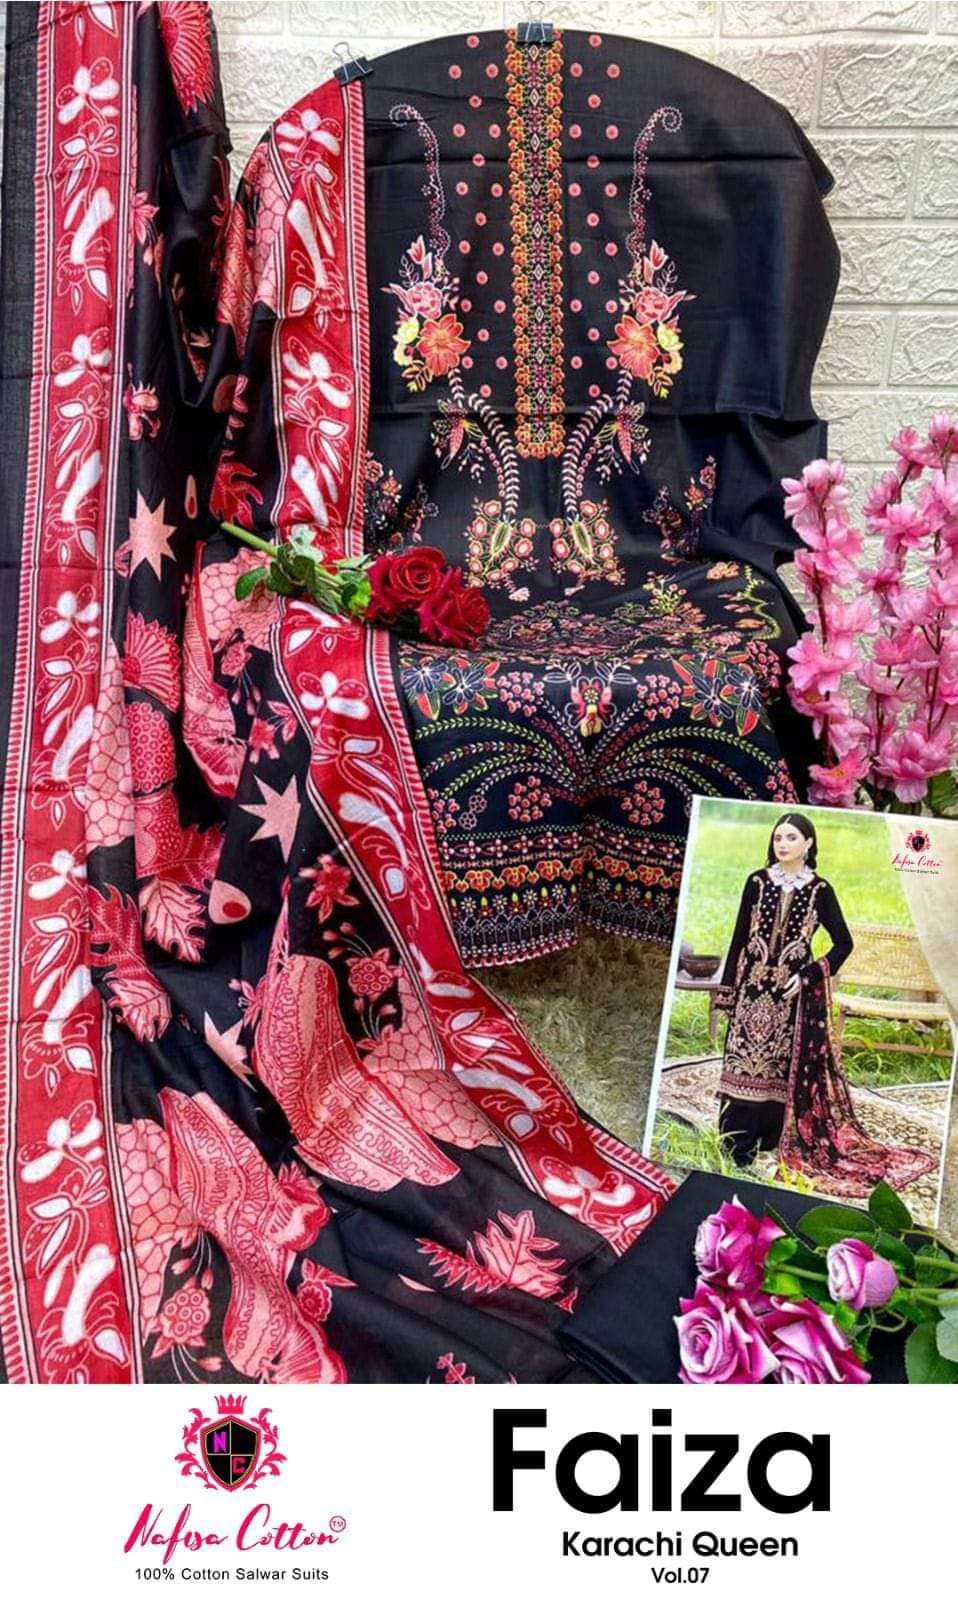 faiza karachi queen vol 7 by nafisa cotton amazing designs pakistani suits material